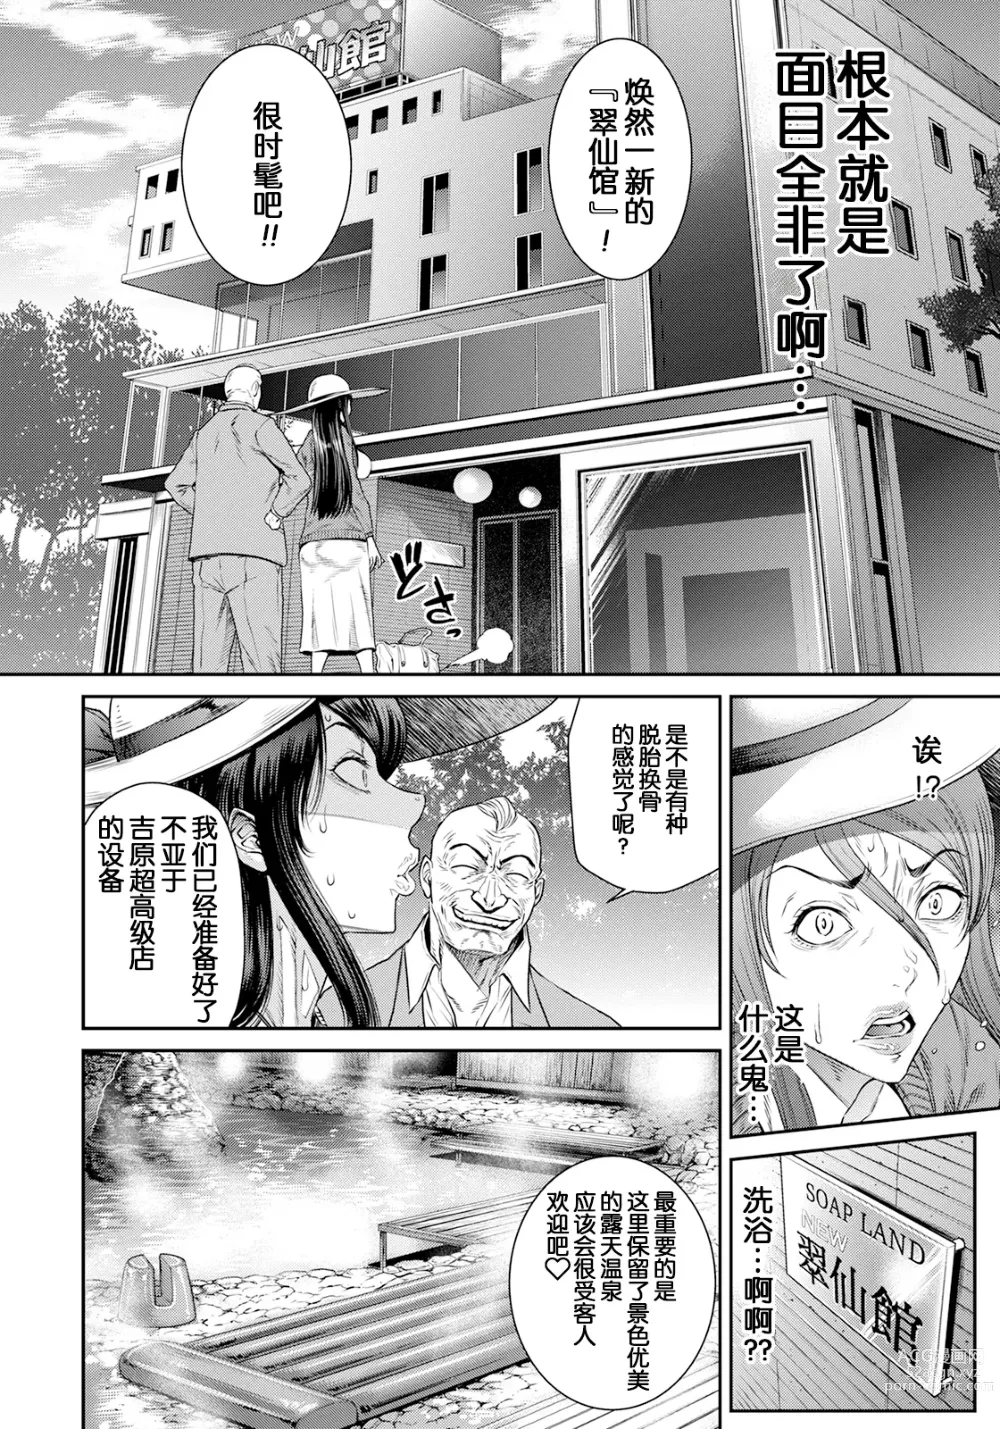 Page 7 of manga Shinise Ryokan